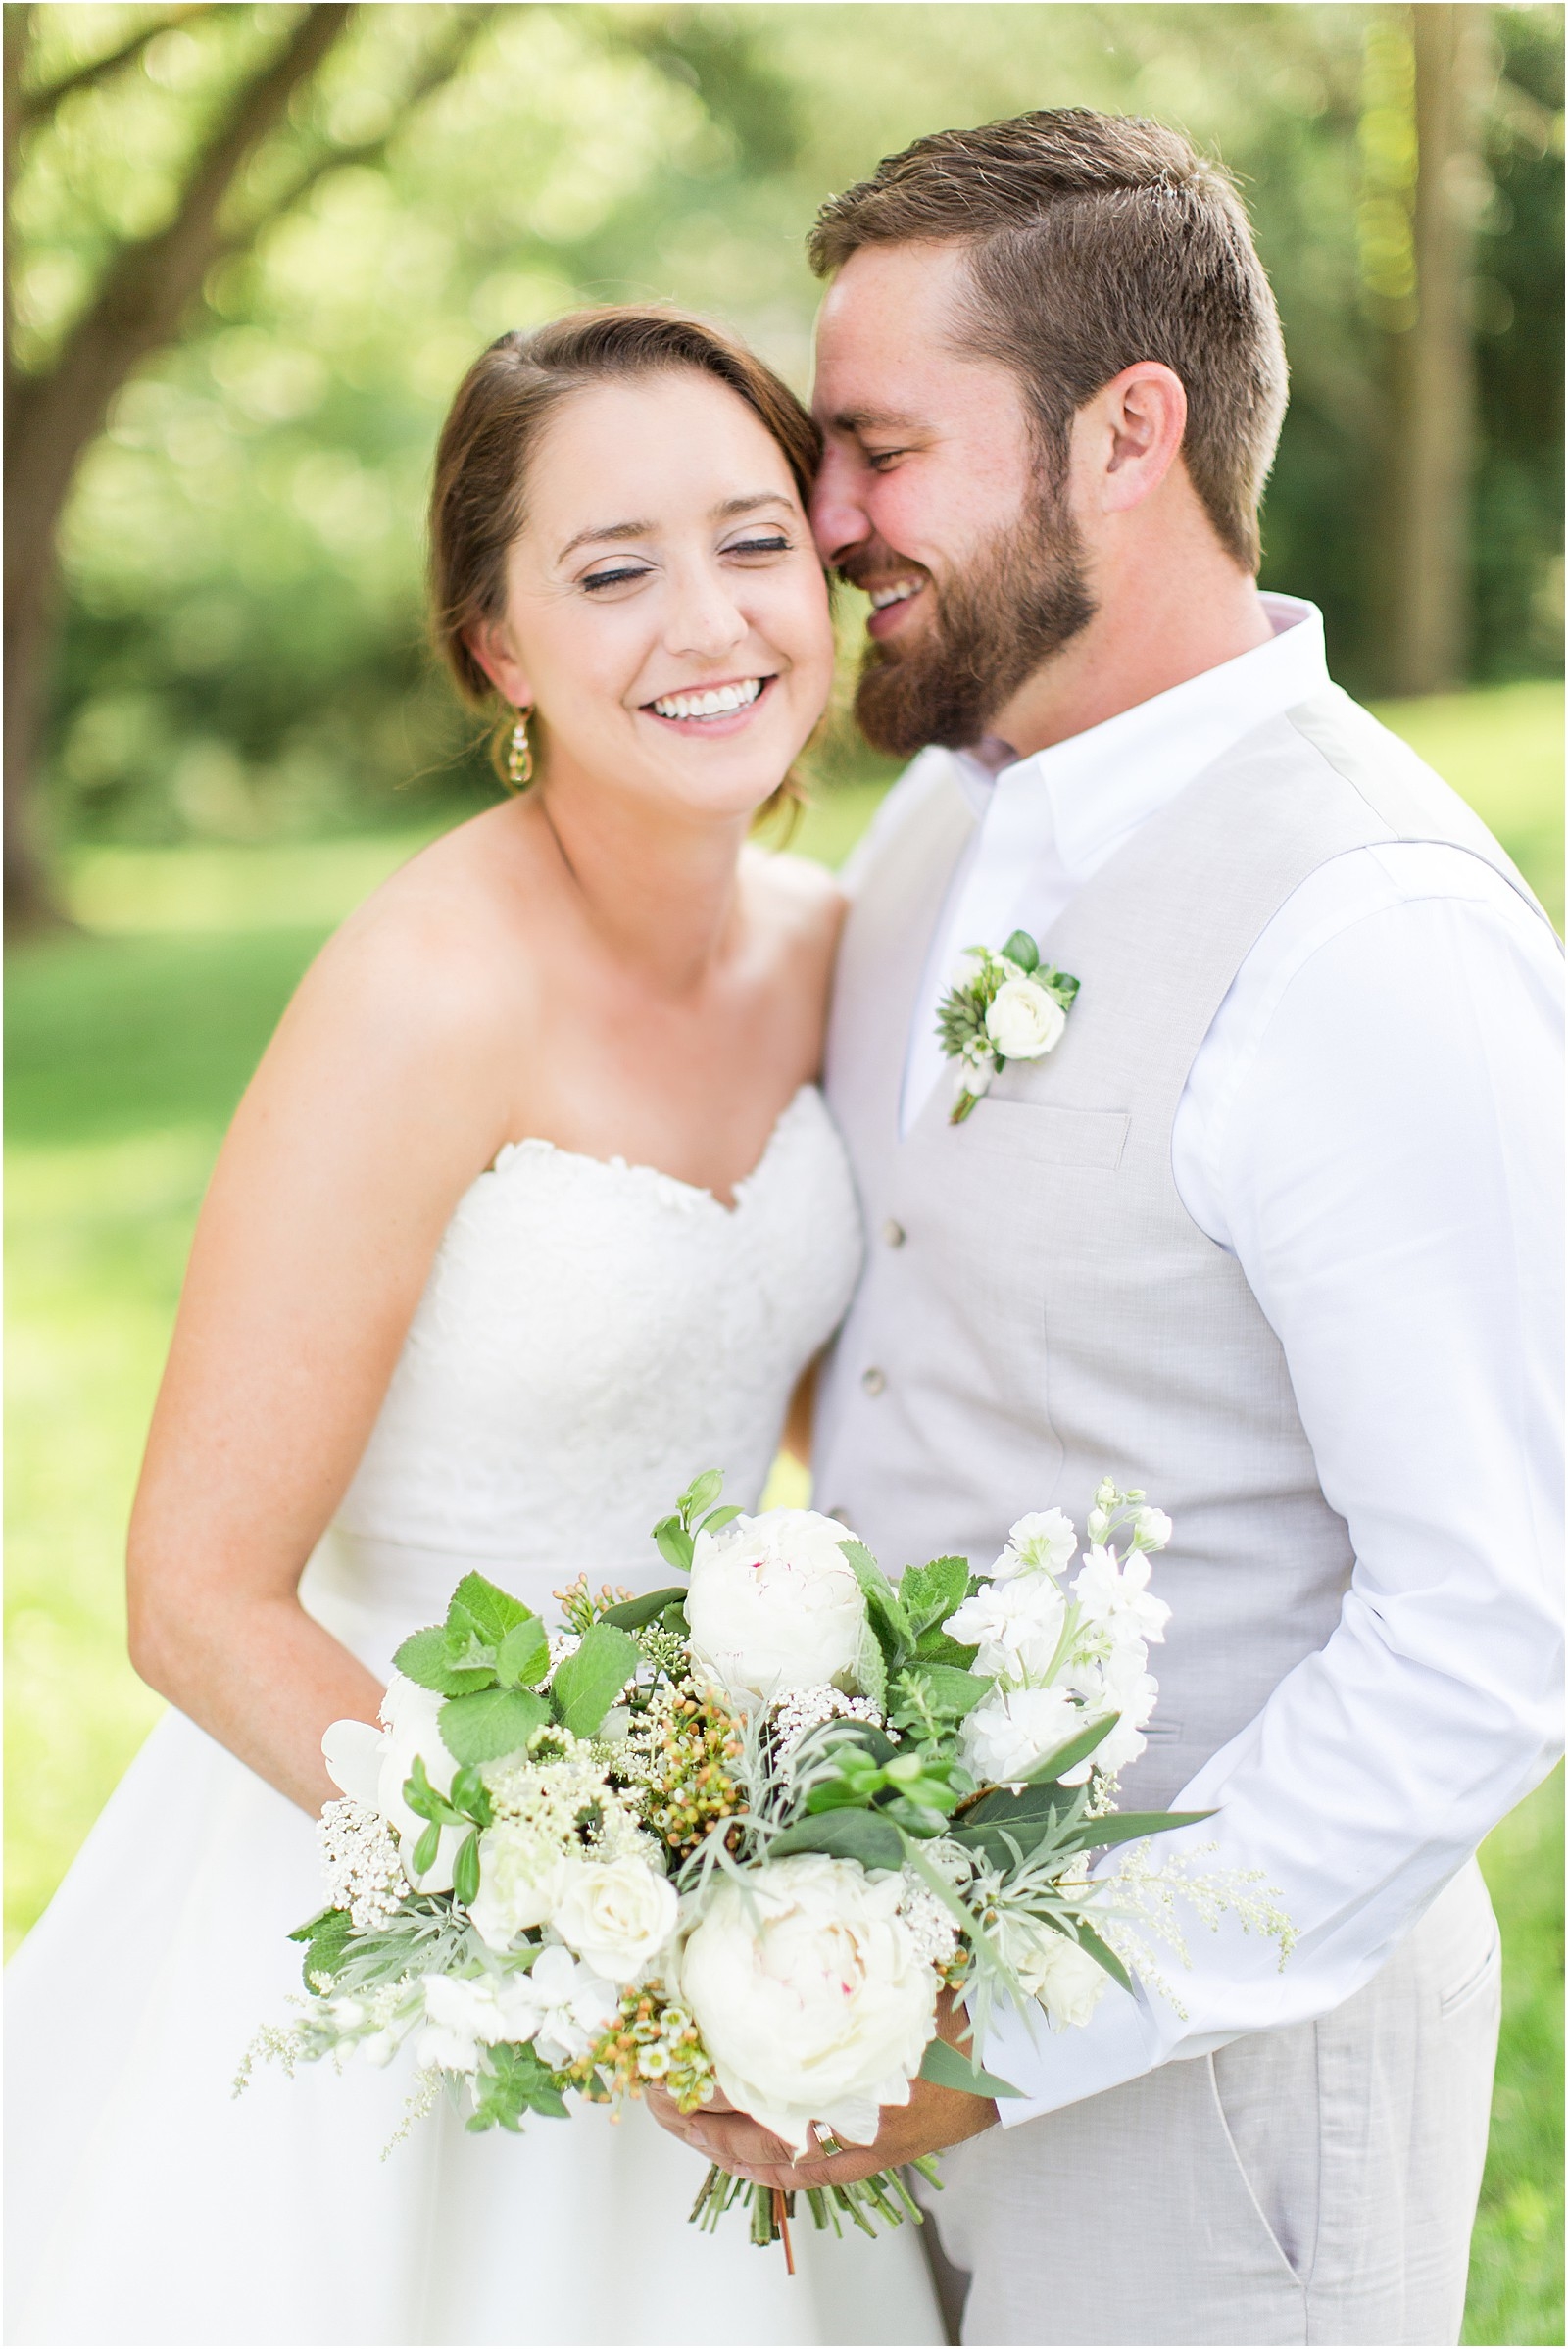 A Evansville Indiana Backyard Wedding | Bailey and Ben 040.jpg